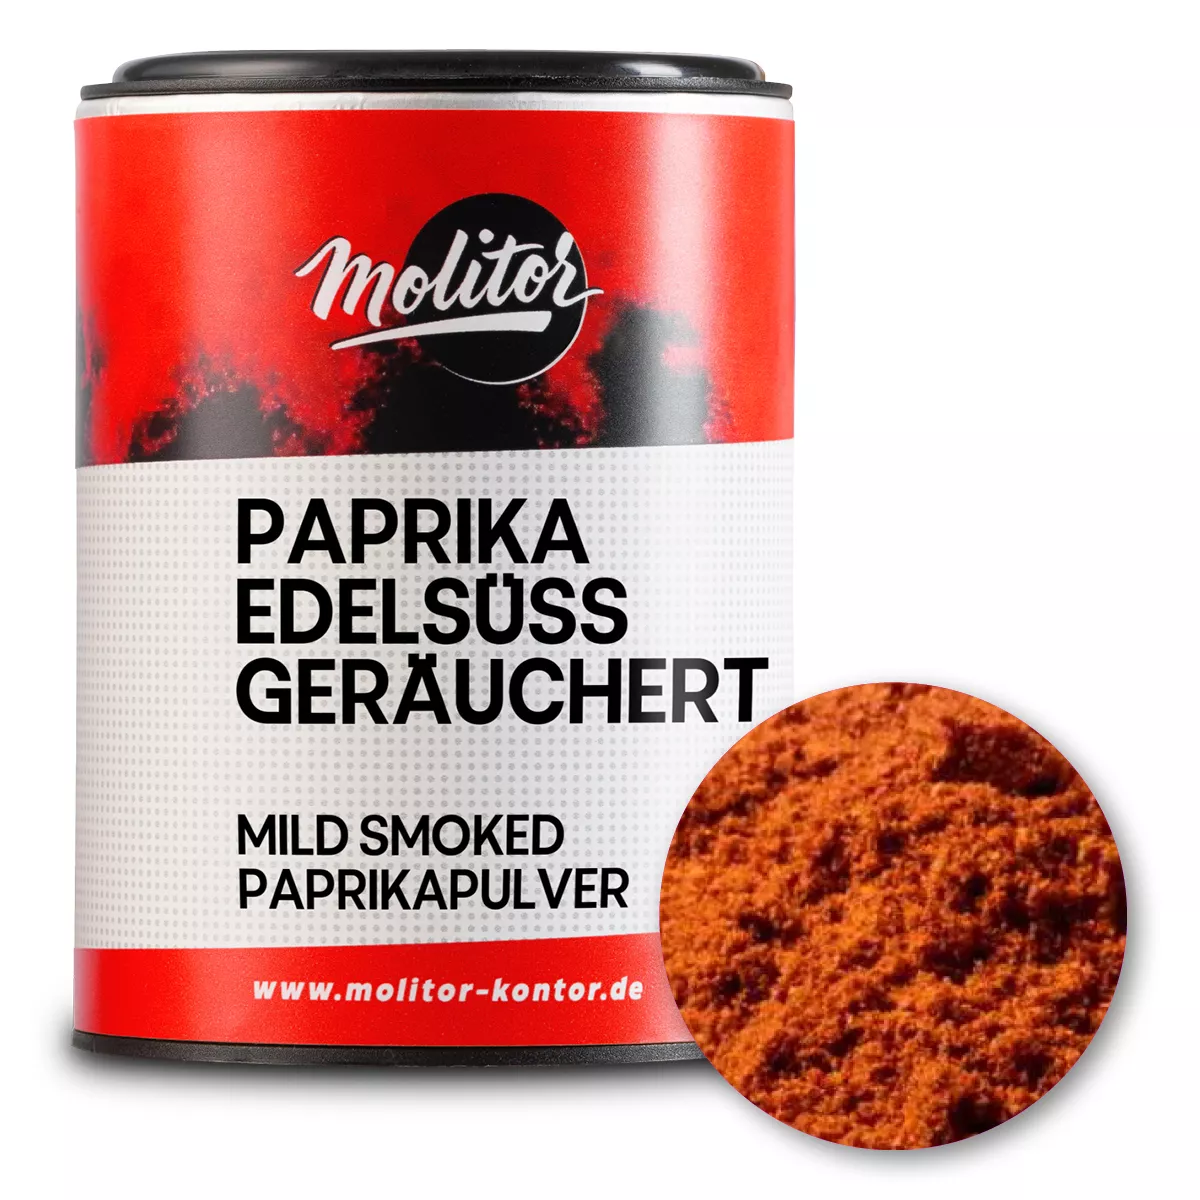 Paprika geräuchert | edelsüß, mild smoked